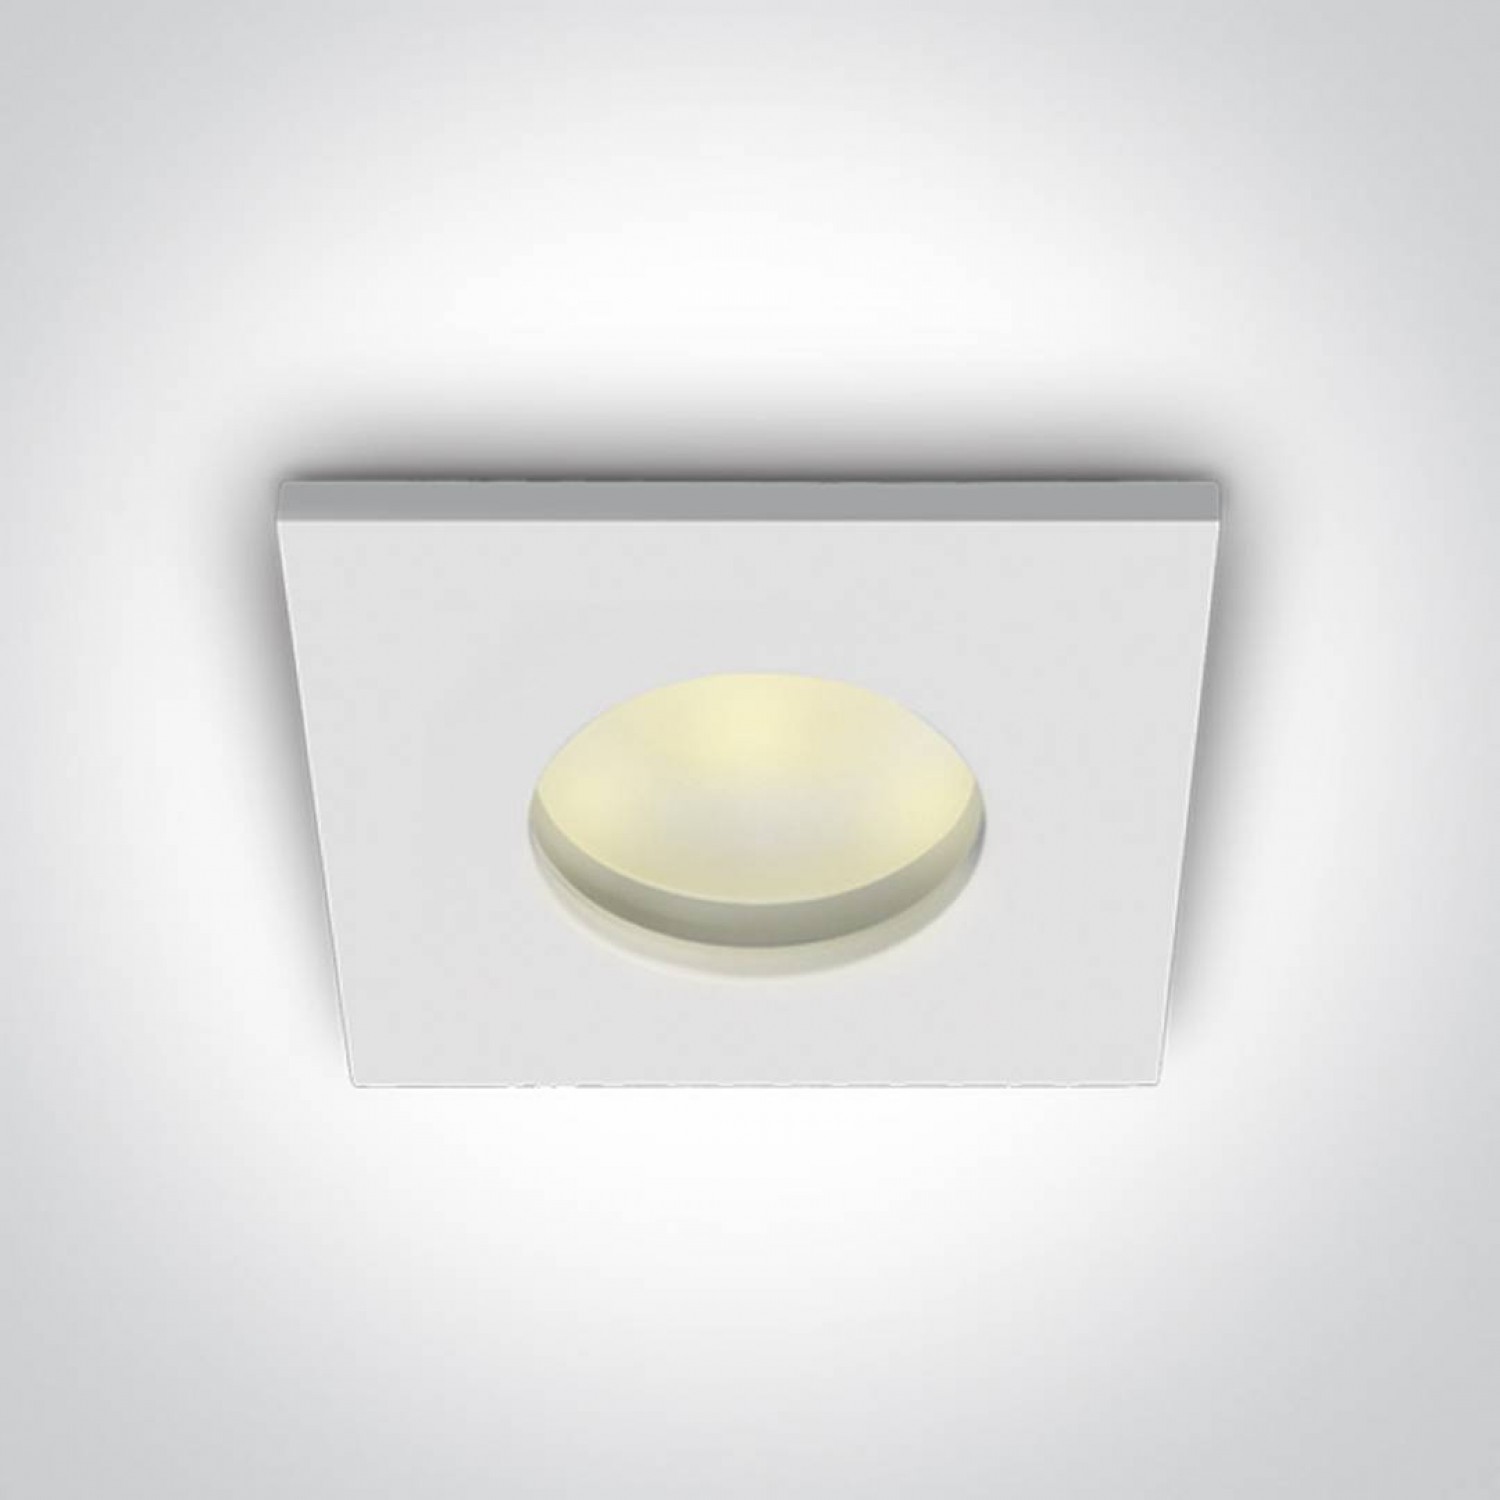 alt_image Точечный светильник ONE Light The IP44 Bathroom Range Die cast 50105R/W